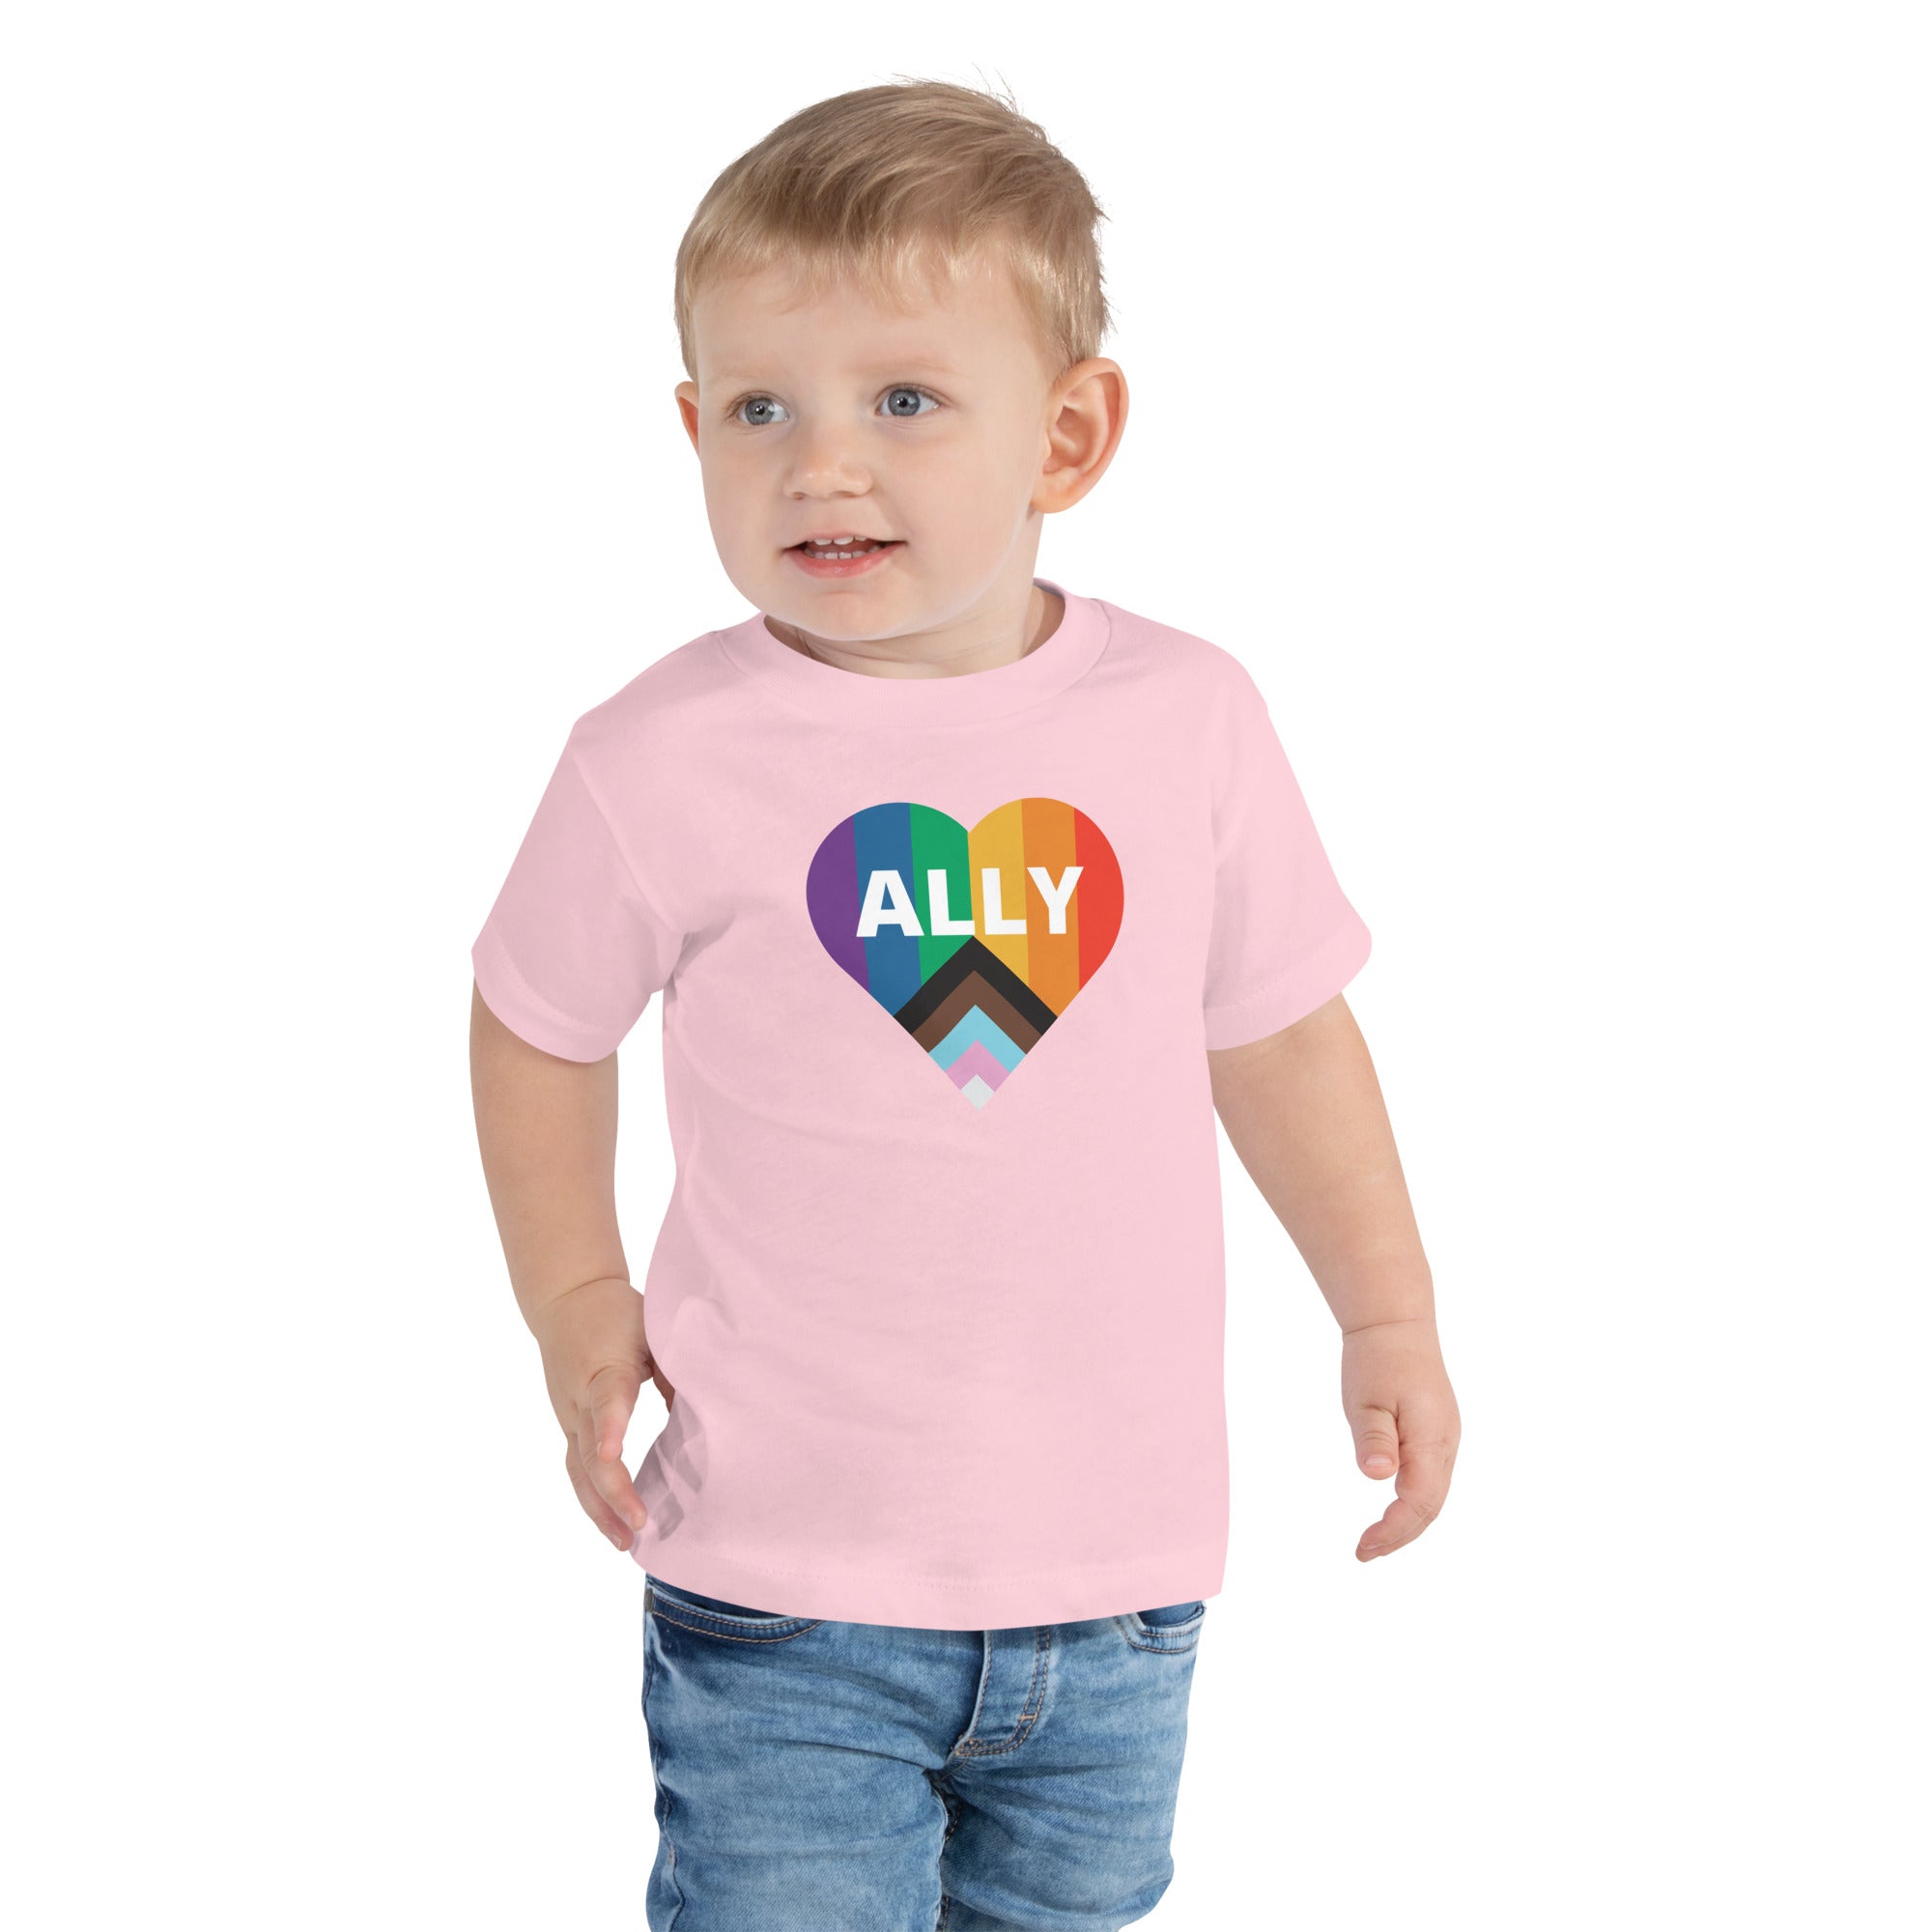 Ally - Toddler Short Sleeve Tee